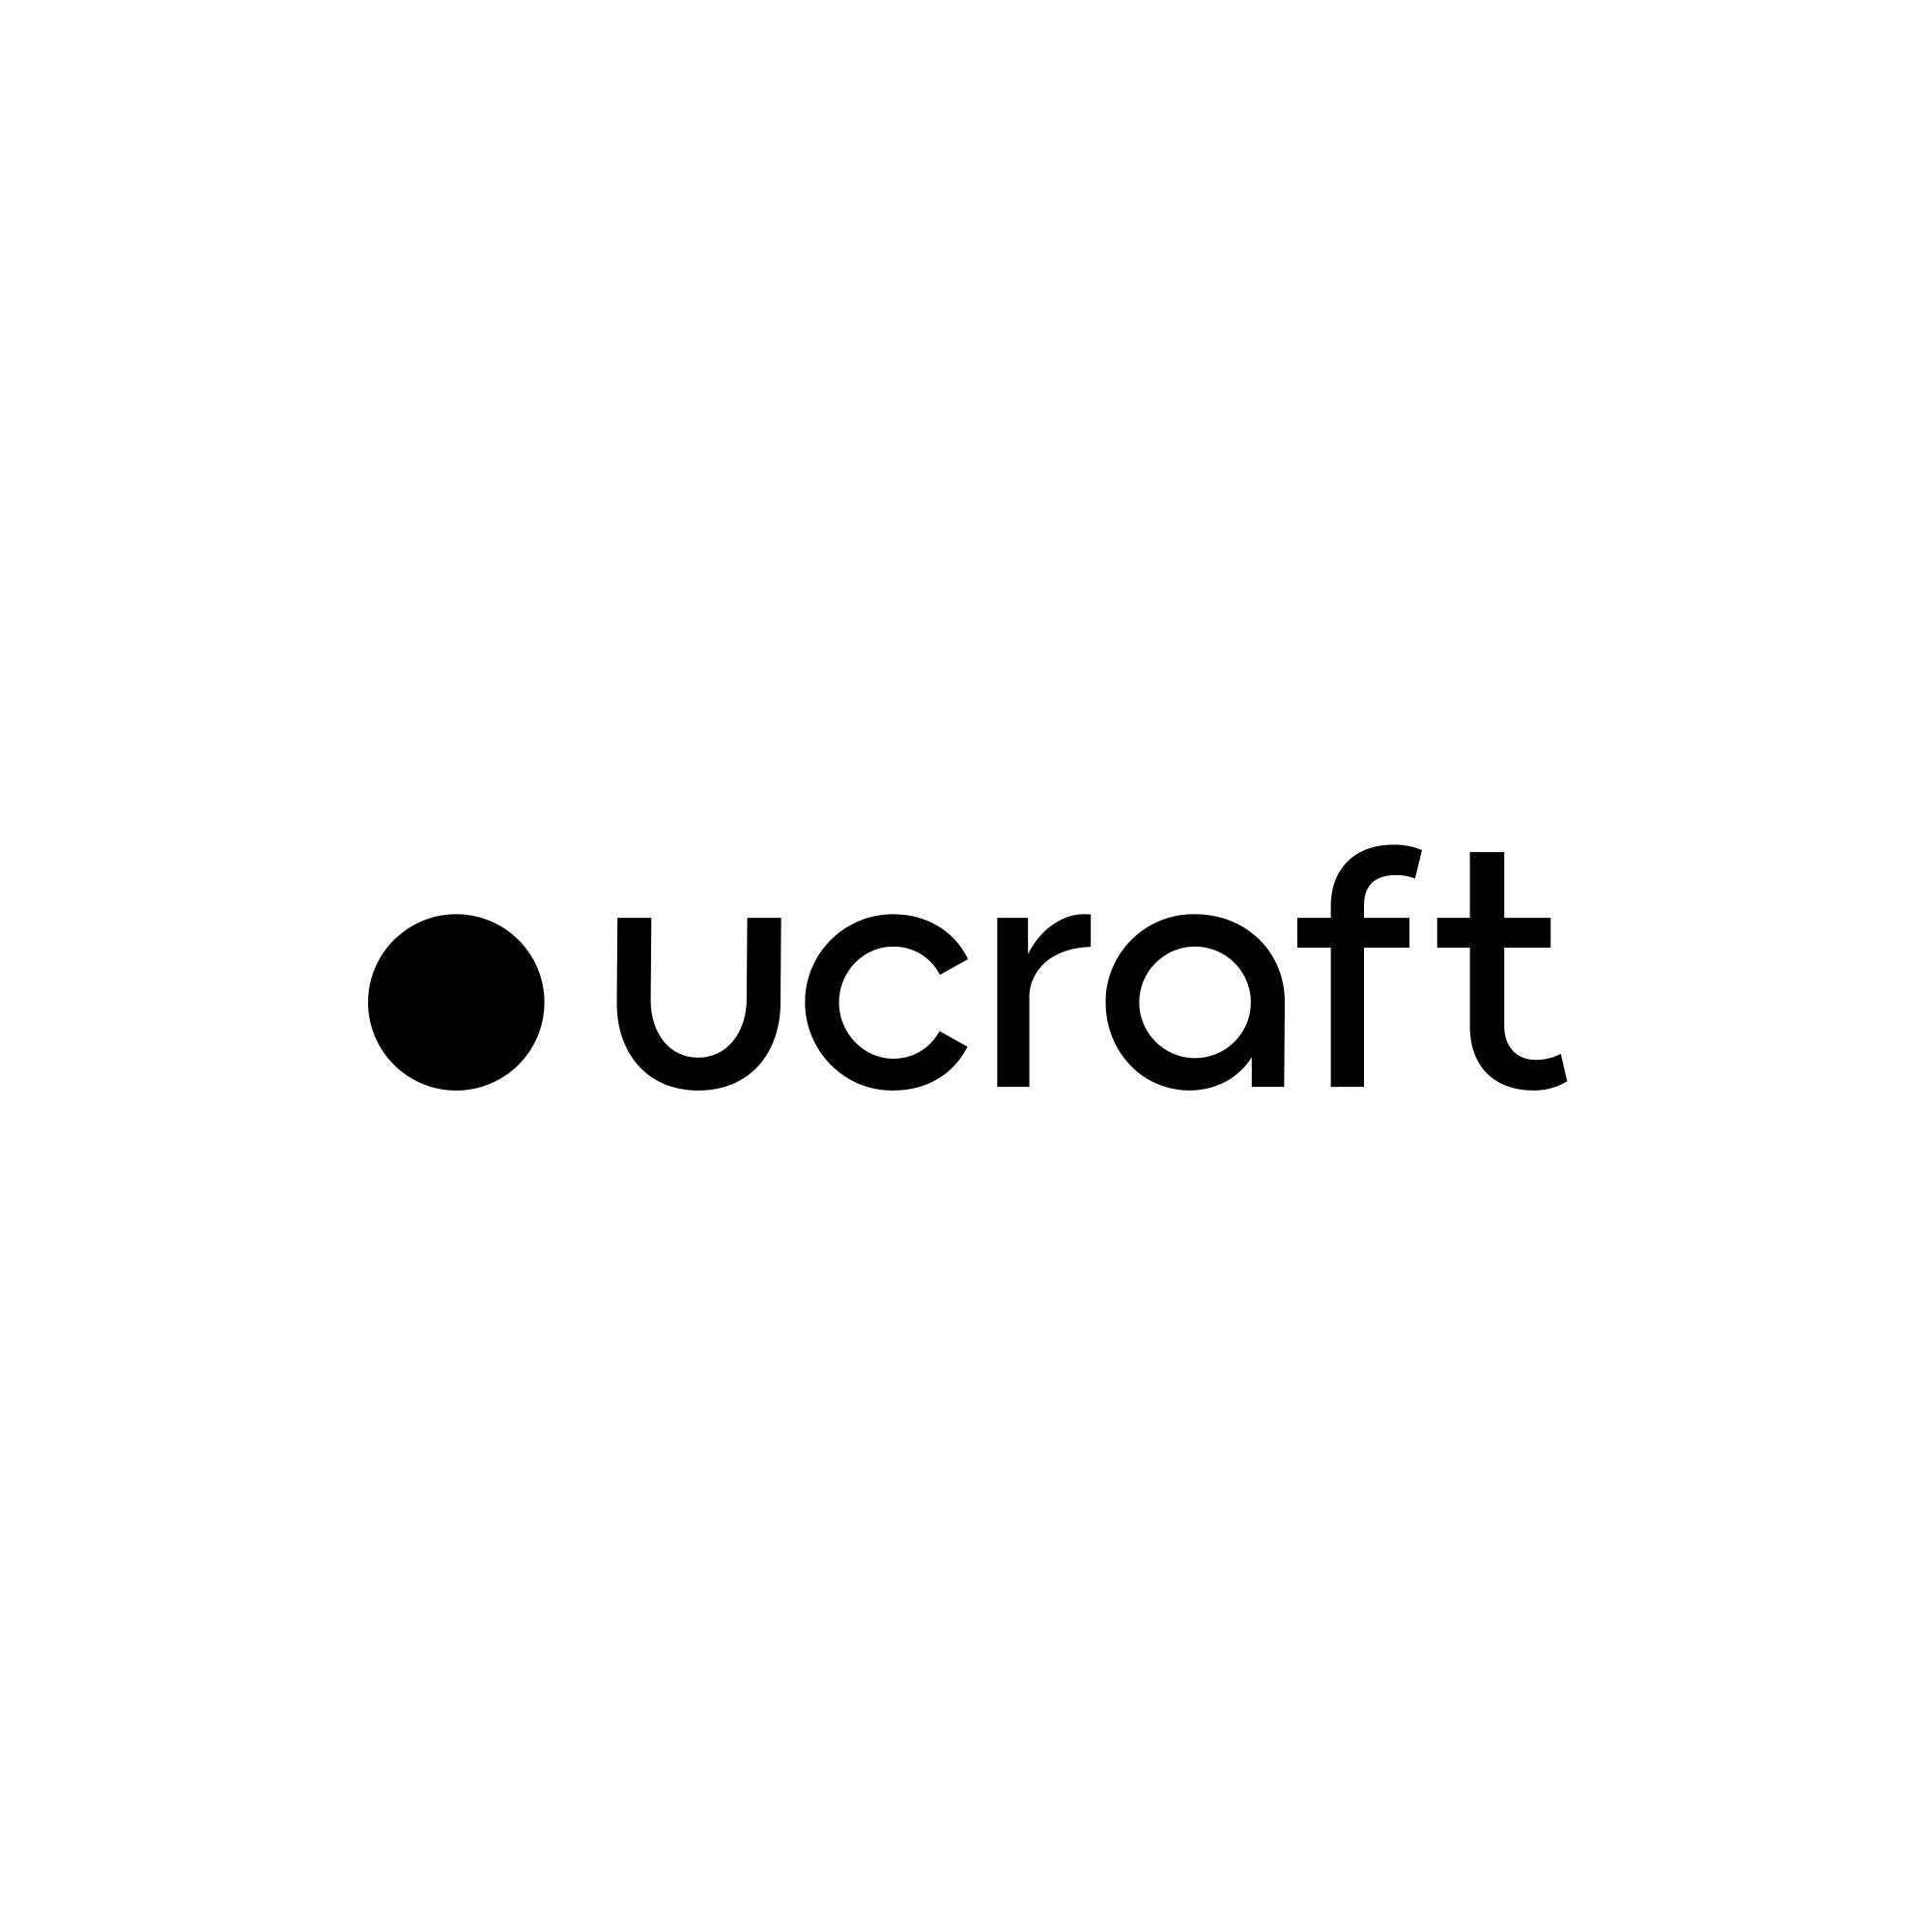 UCRAFT logo